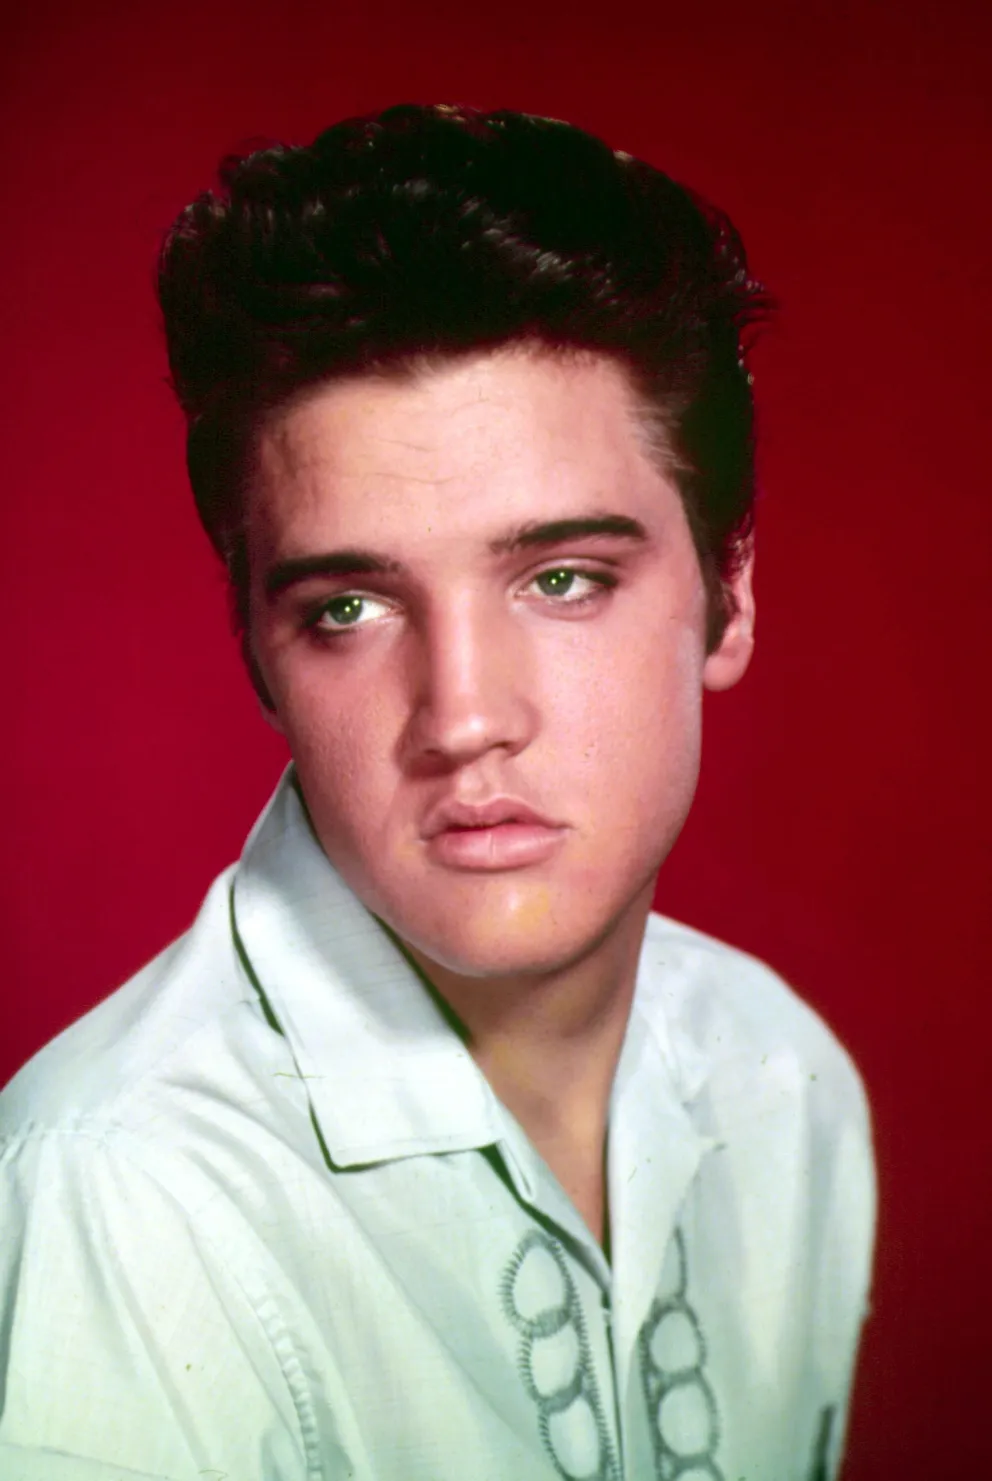 Singer Elvis Presley poses for a studio portrait circa 1964 | Photo: Getty Images